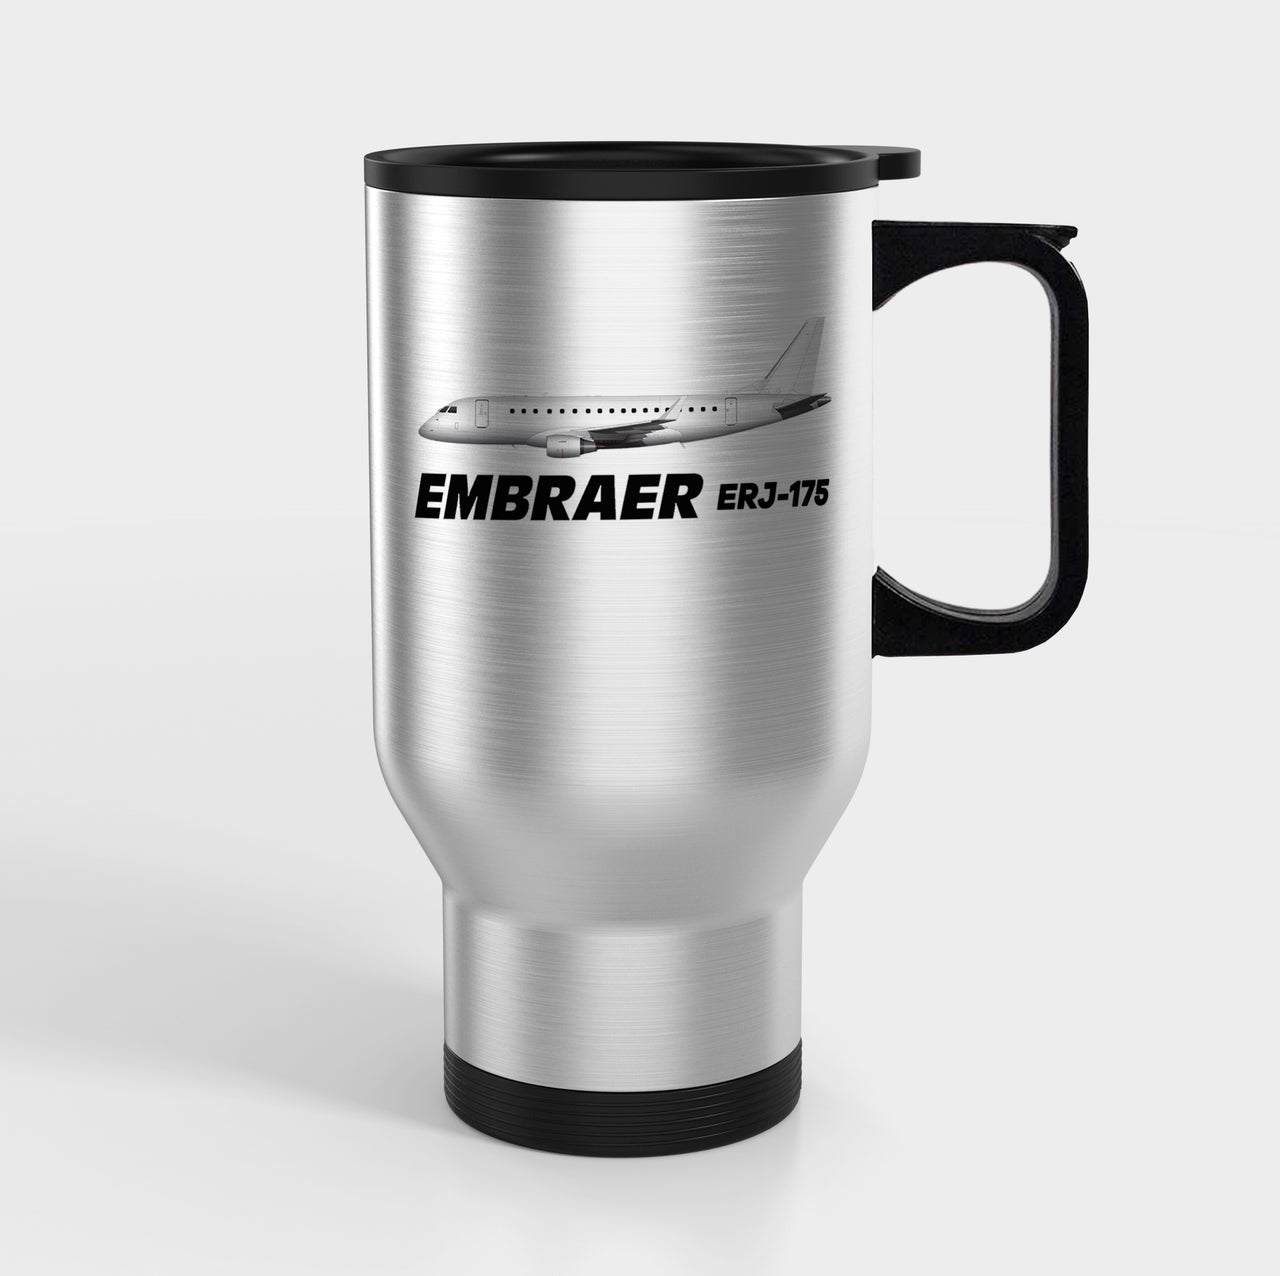 The Embraer ERJ-175 Designed Travel Mugs (With Holder)